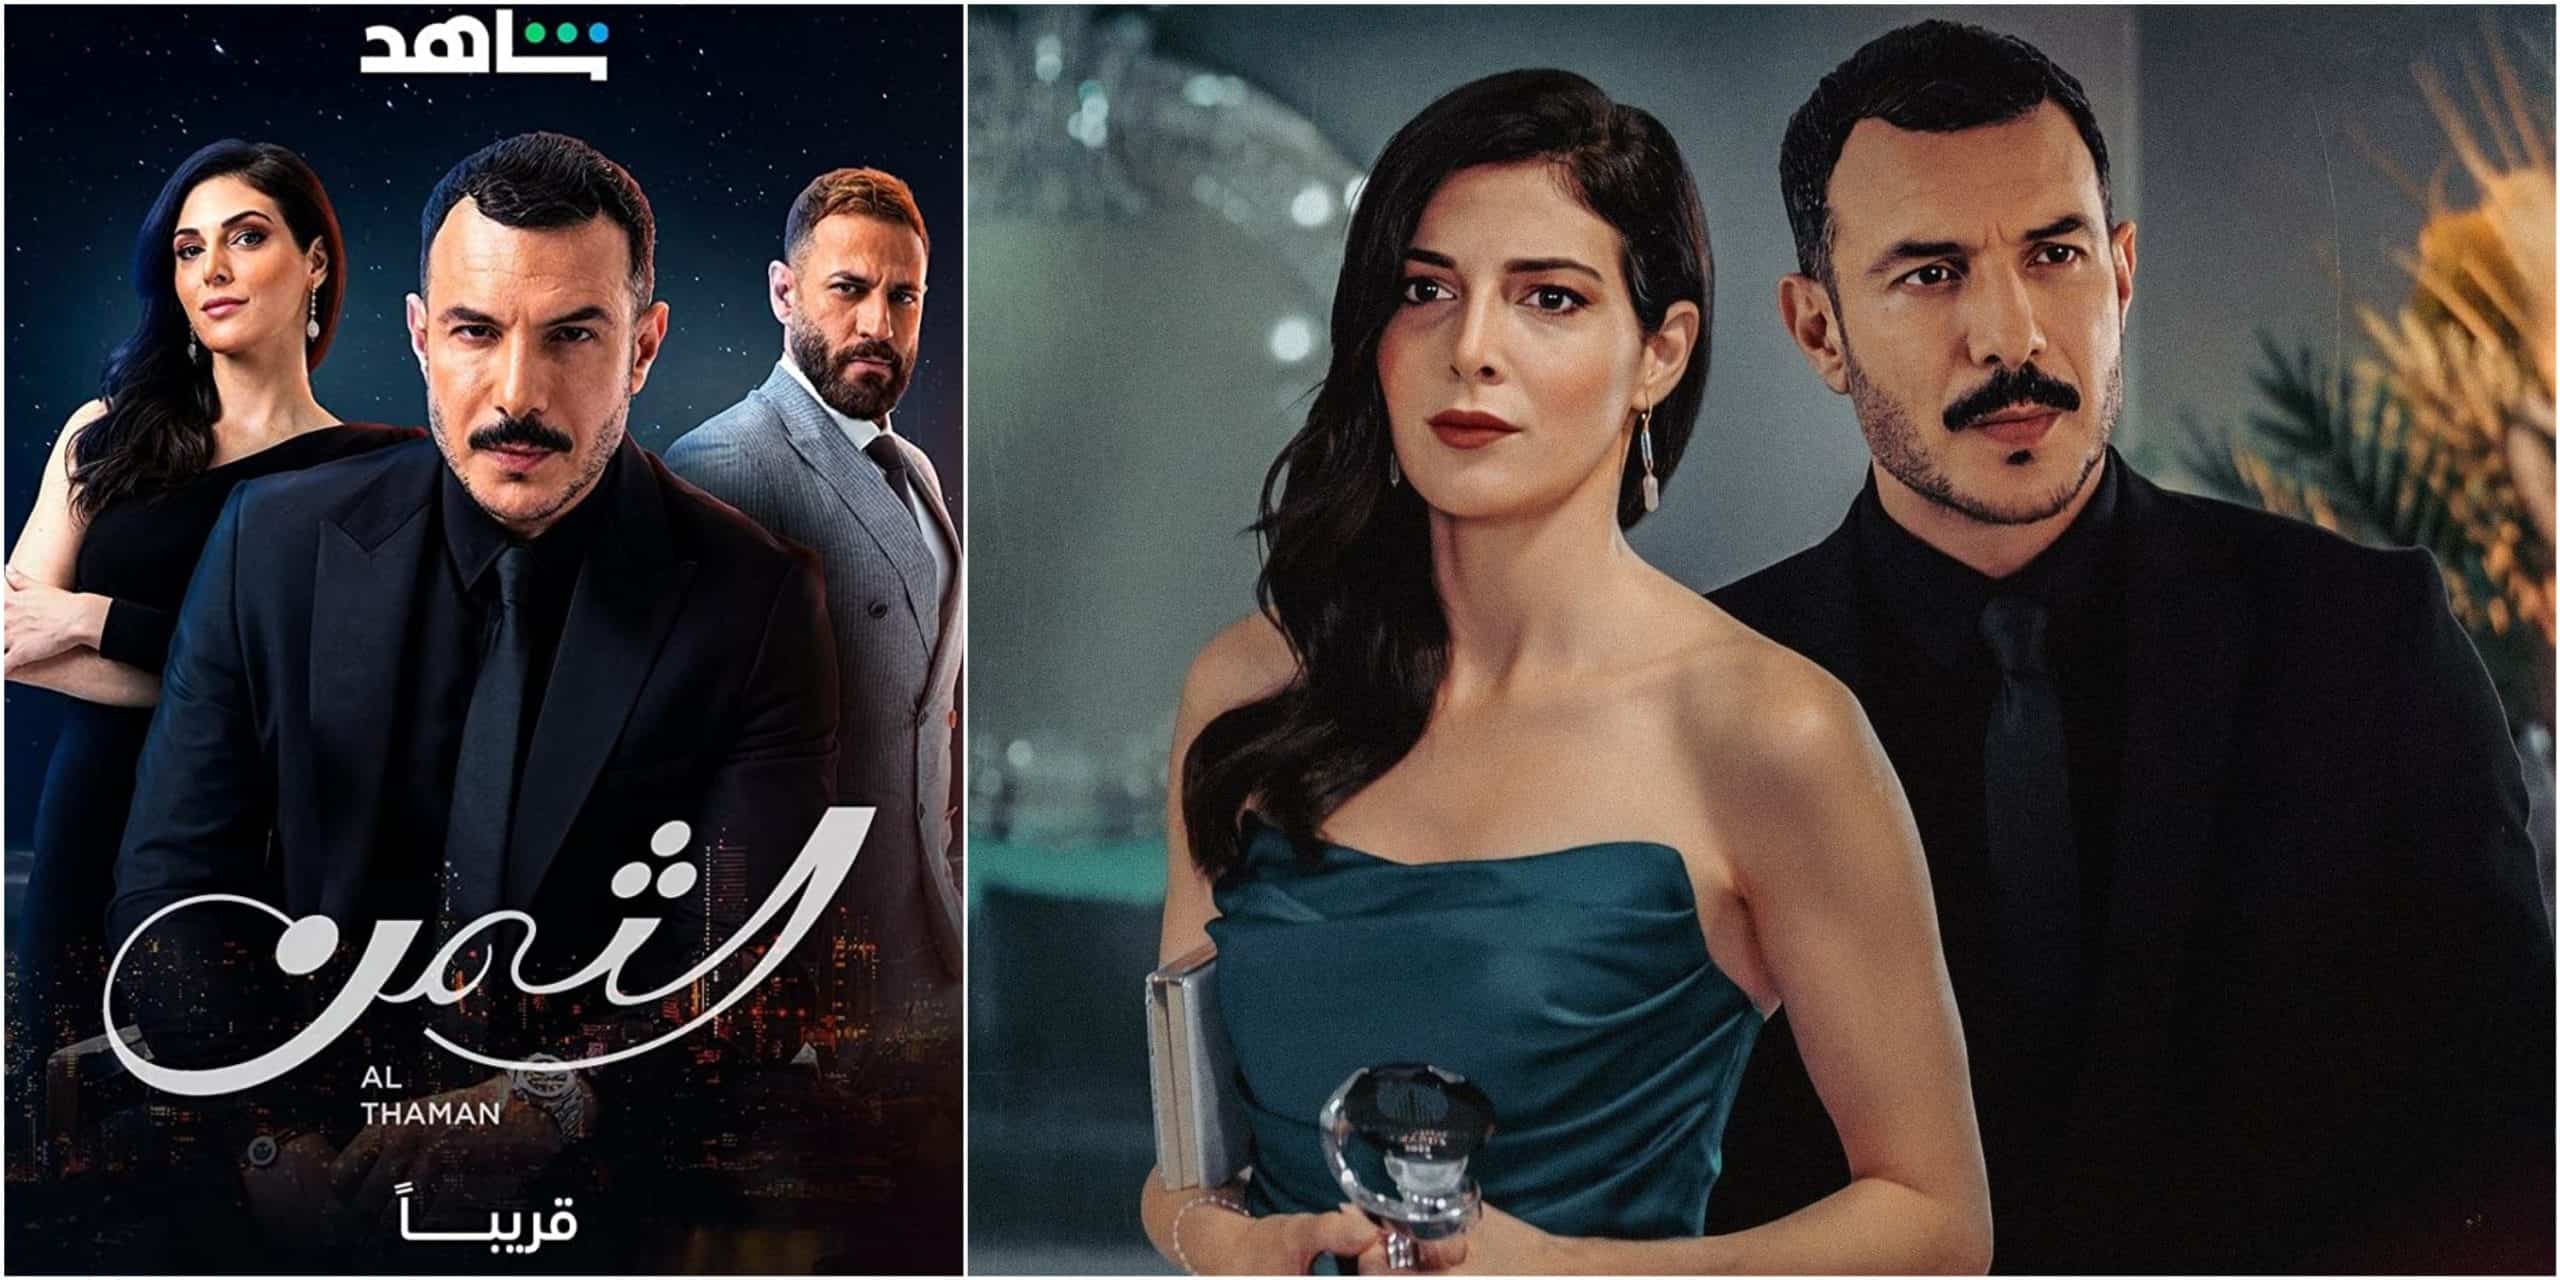 Al Thaman Lebanese Romance Series Episode 45 Release Date